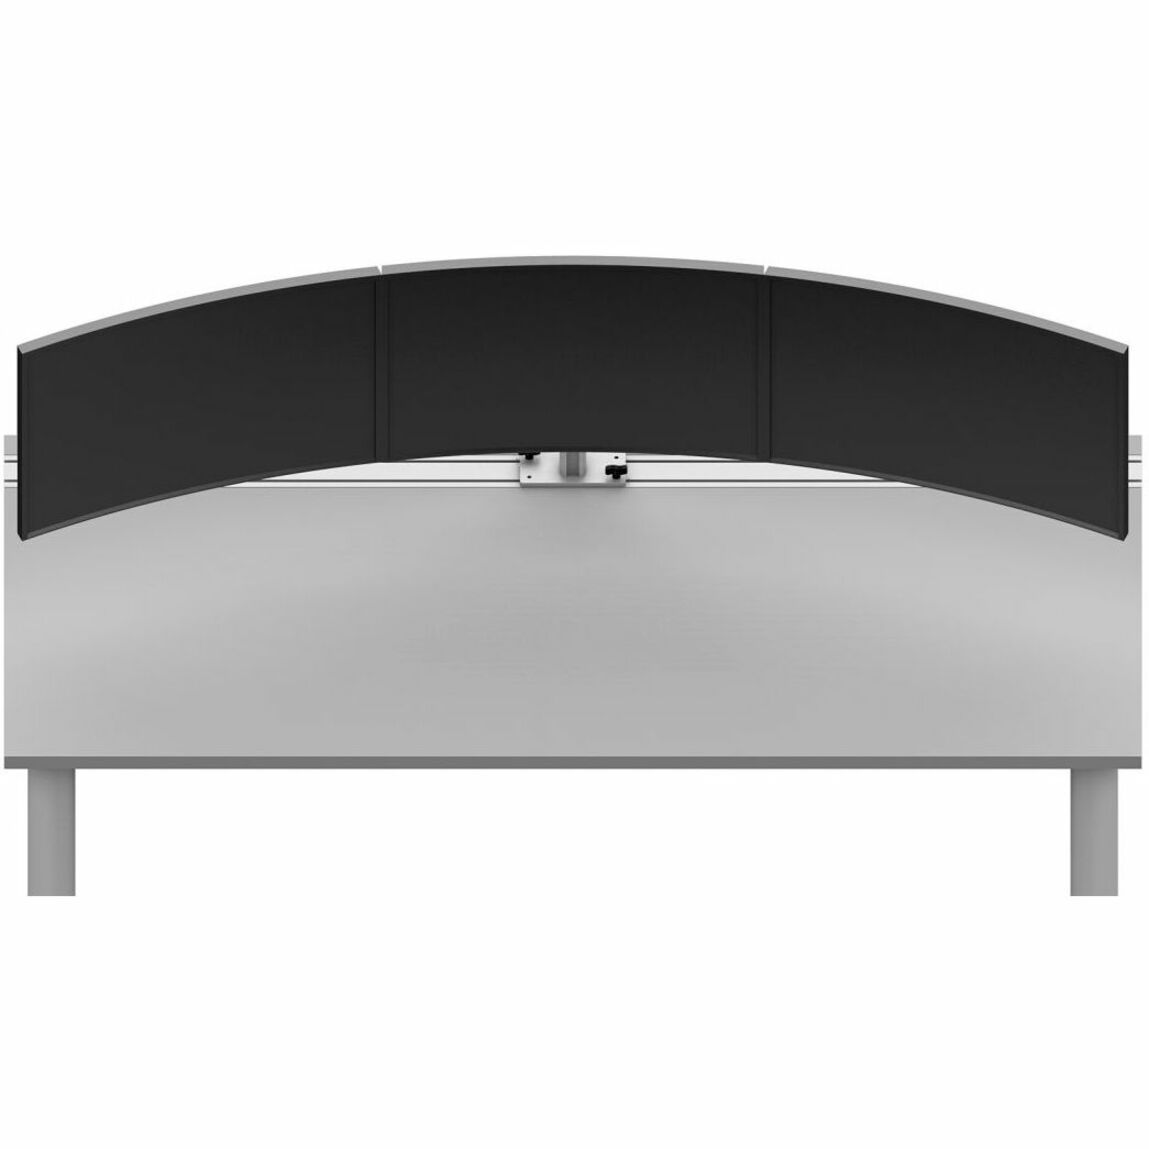 Atdec Modular Desk Mount for Monitor Display Screen Flat Panel Display Curved Screen Display - Silver